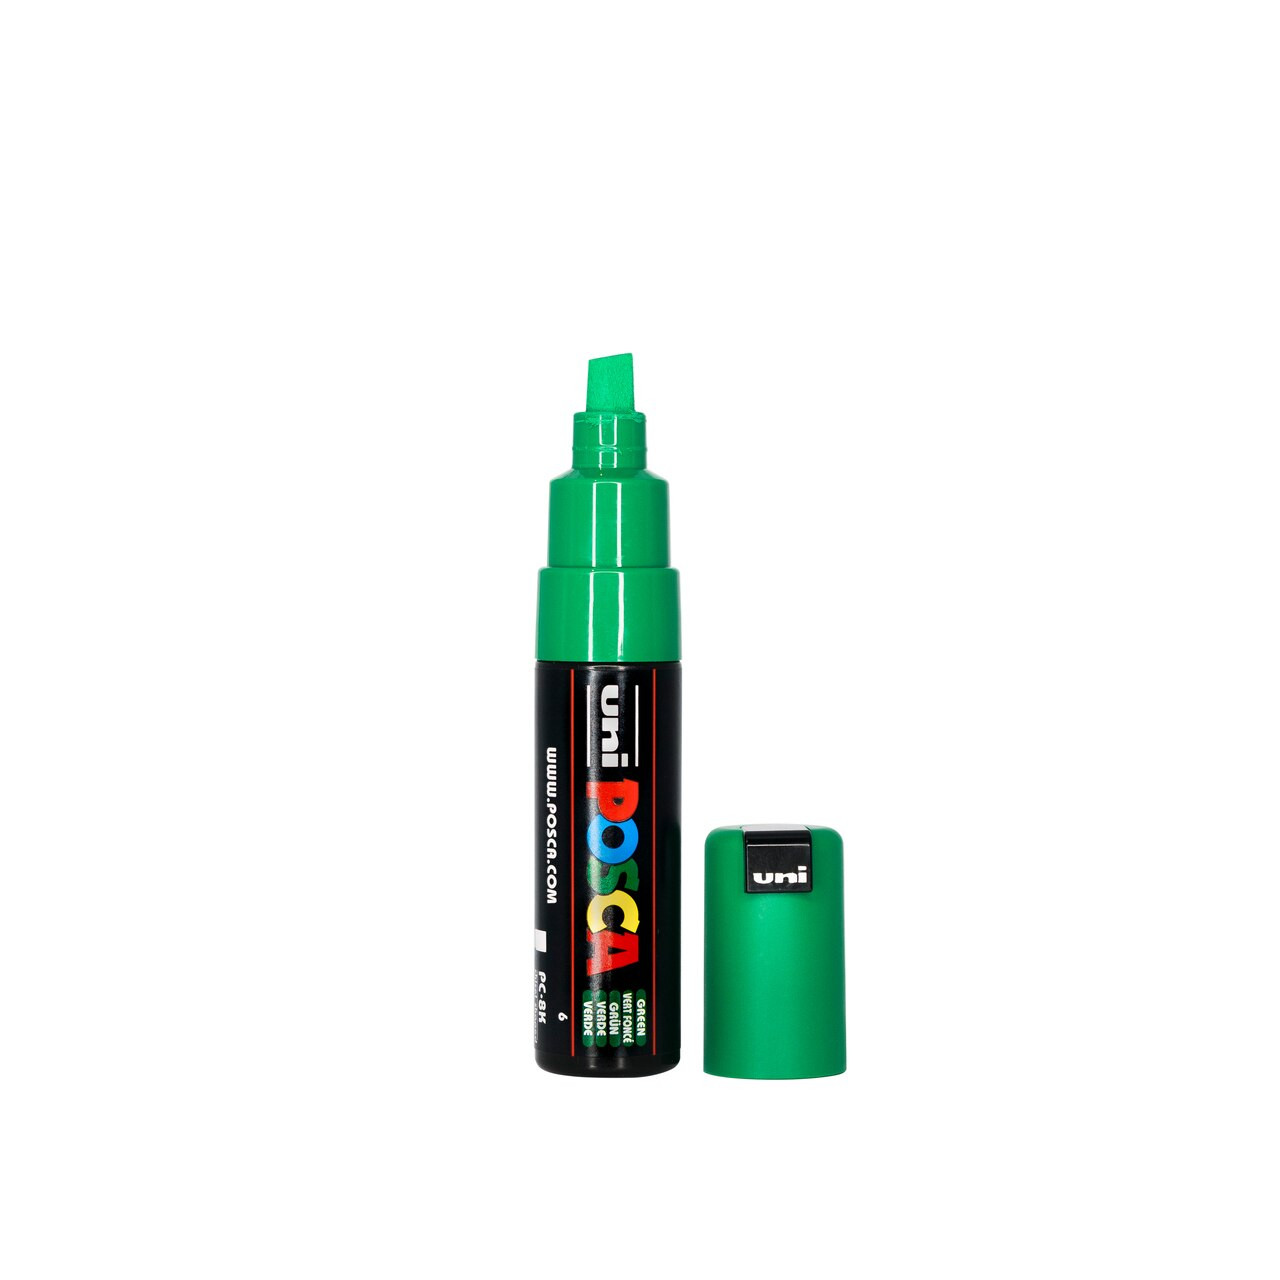 Posca PC-8K Broad Chisel Green Paint Marker